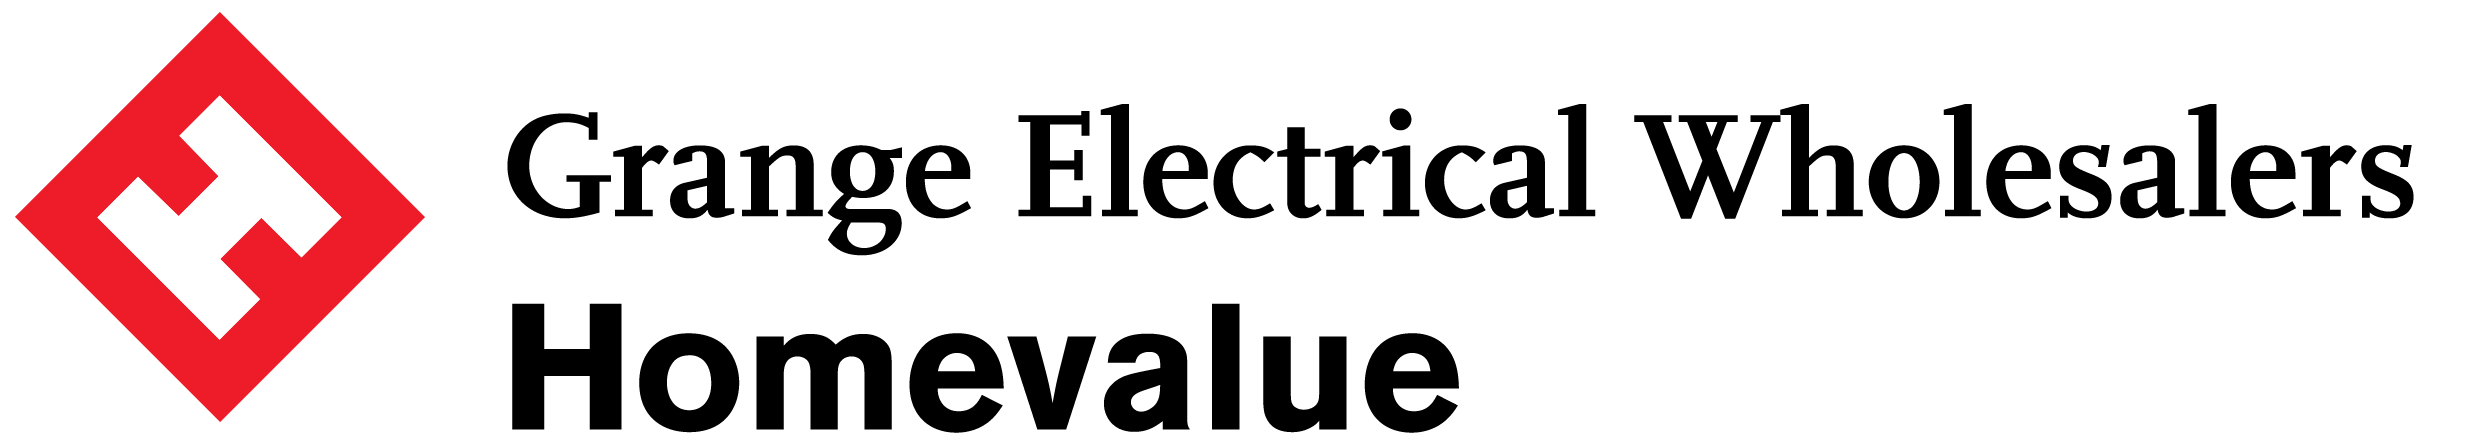 Grange Electrical Wholesalers